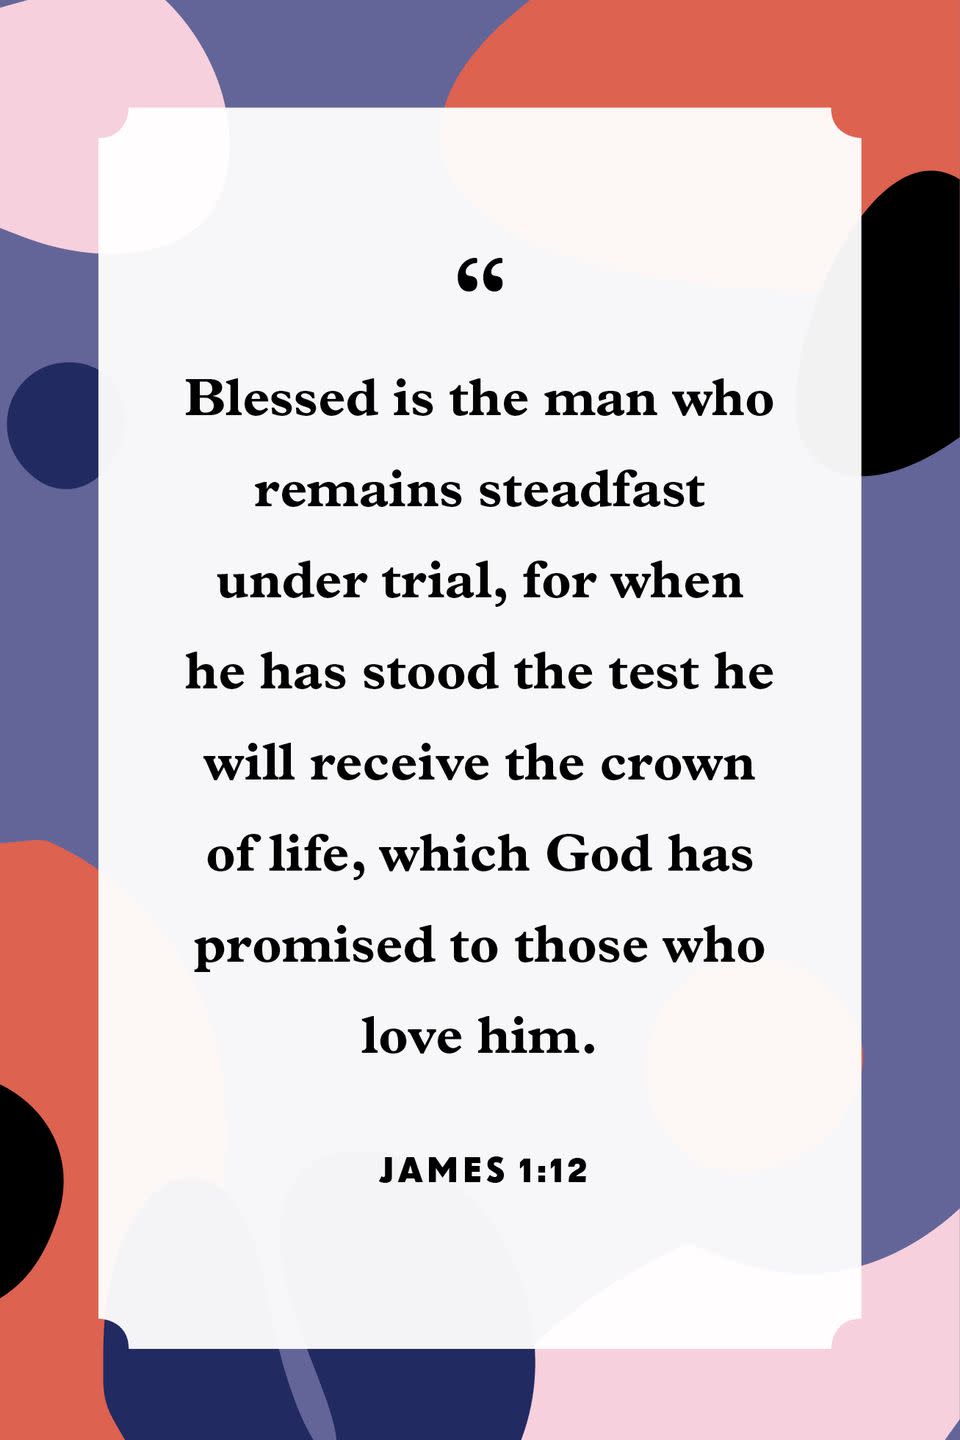 16) James 1:12